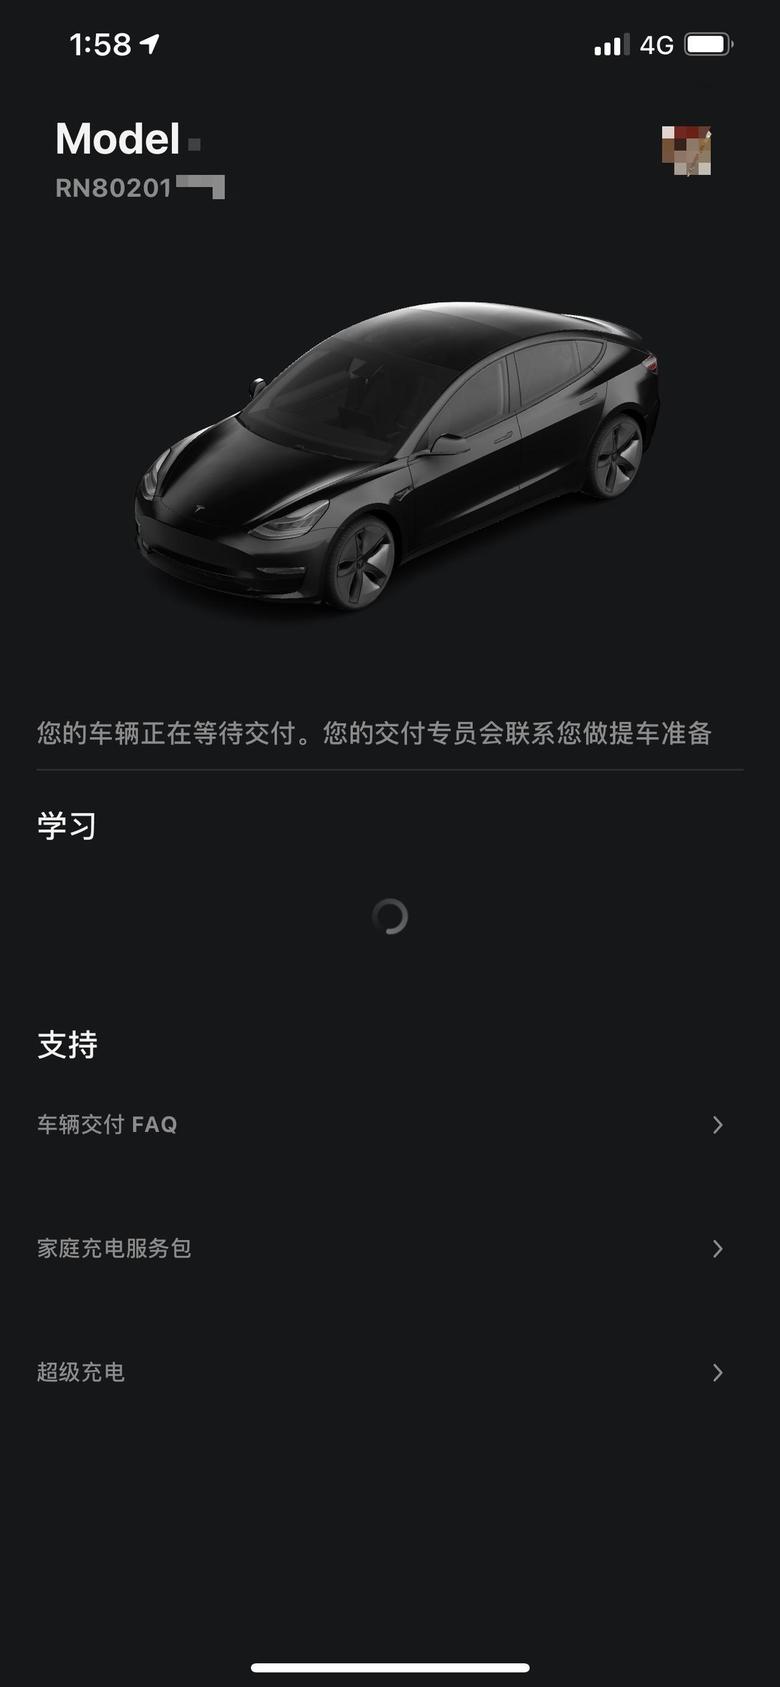 model 3 北京3p黑外黑内，订单号201，已经买了二手的，故转让订单，特斯拉已联系我可以交付了，不想等车的可以私信